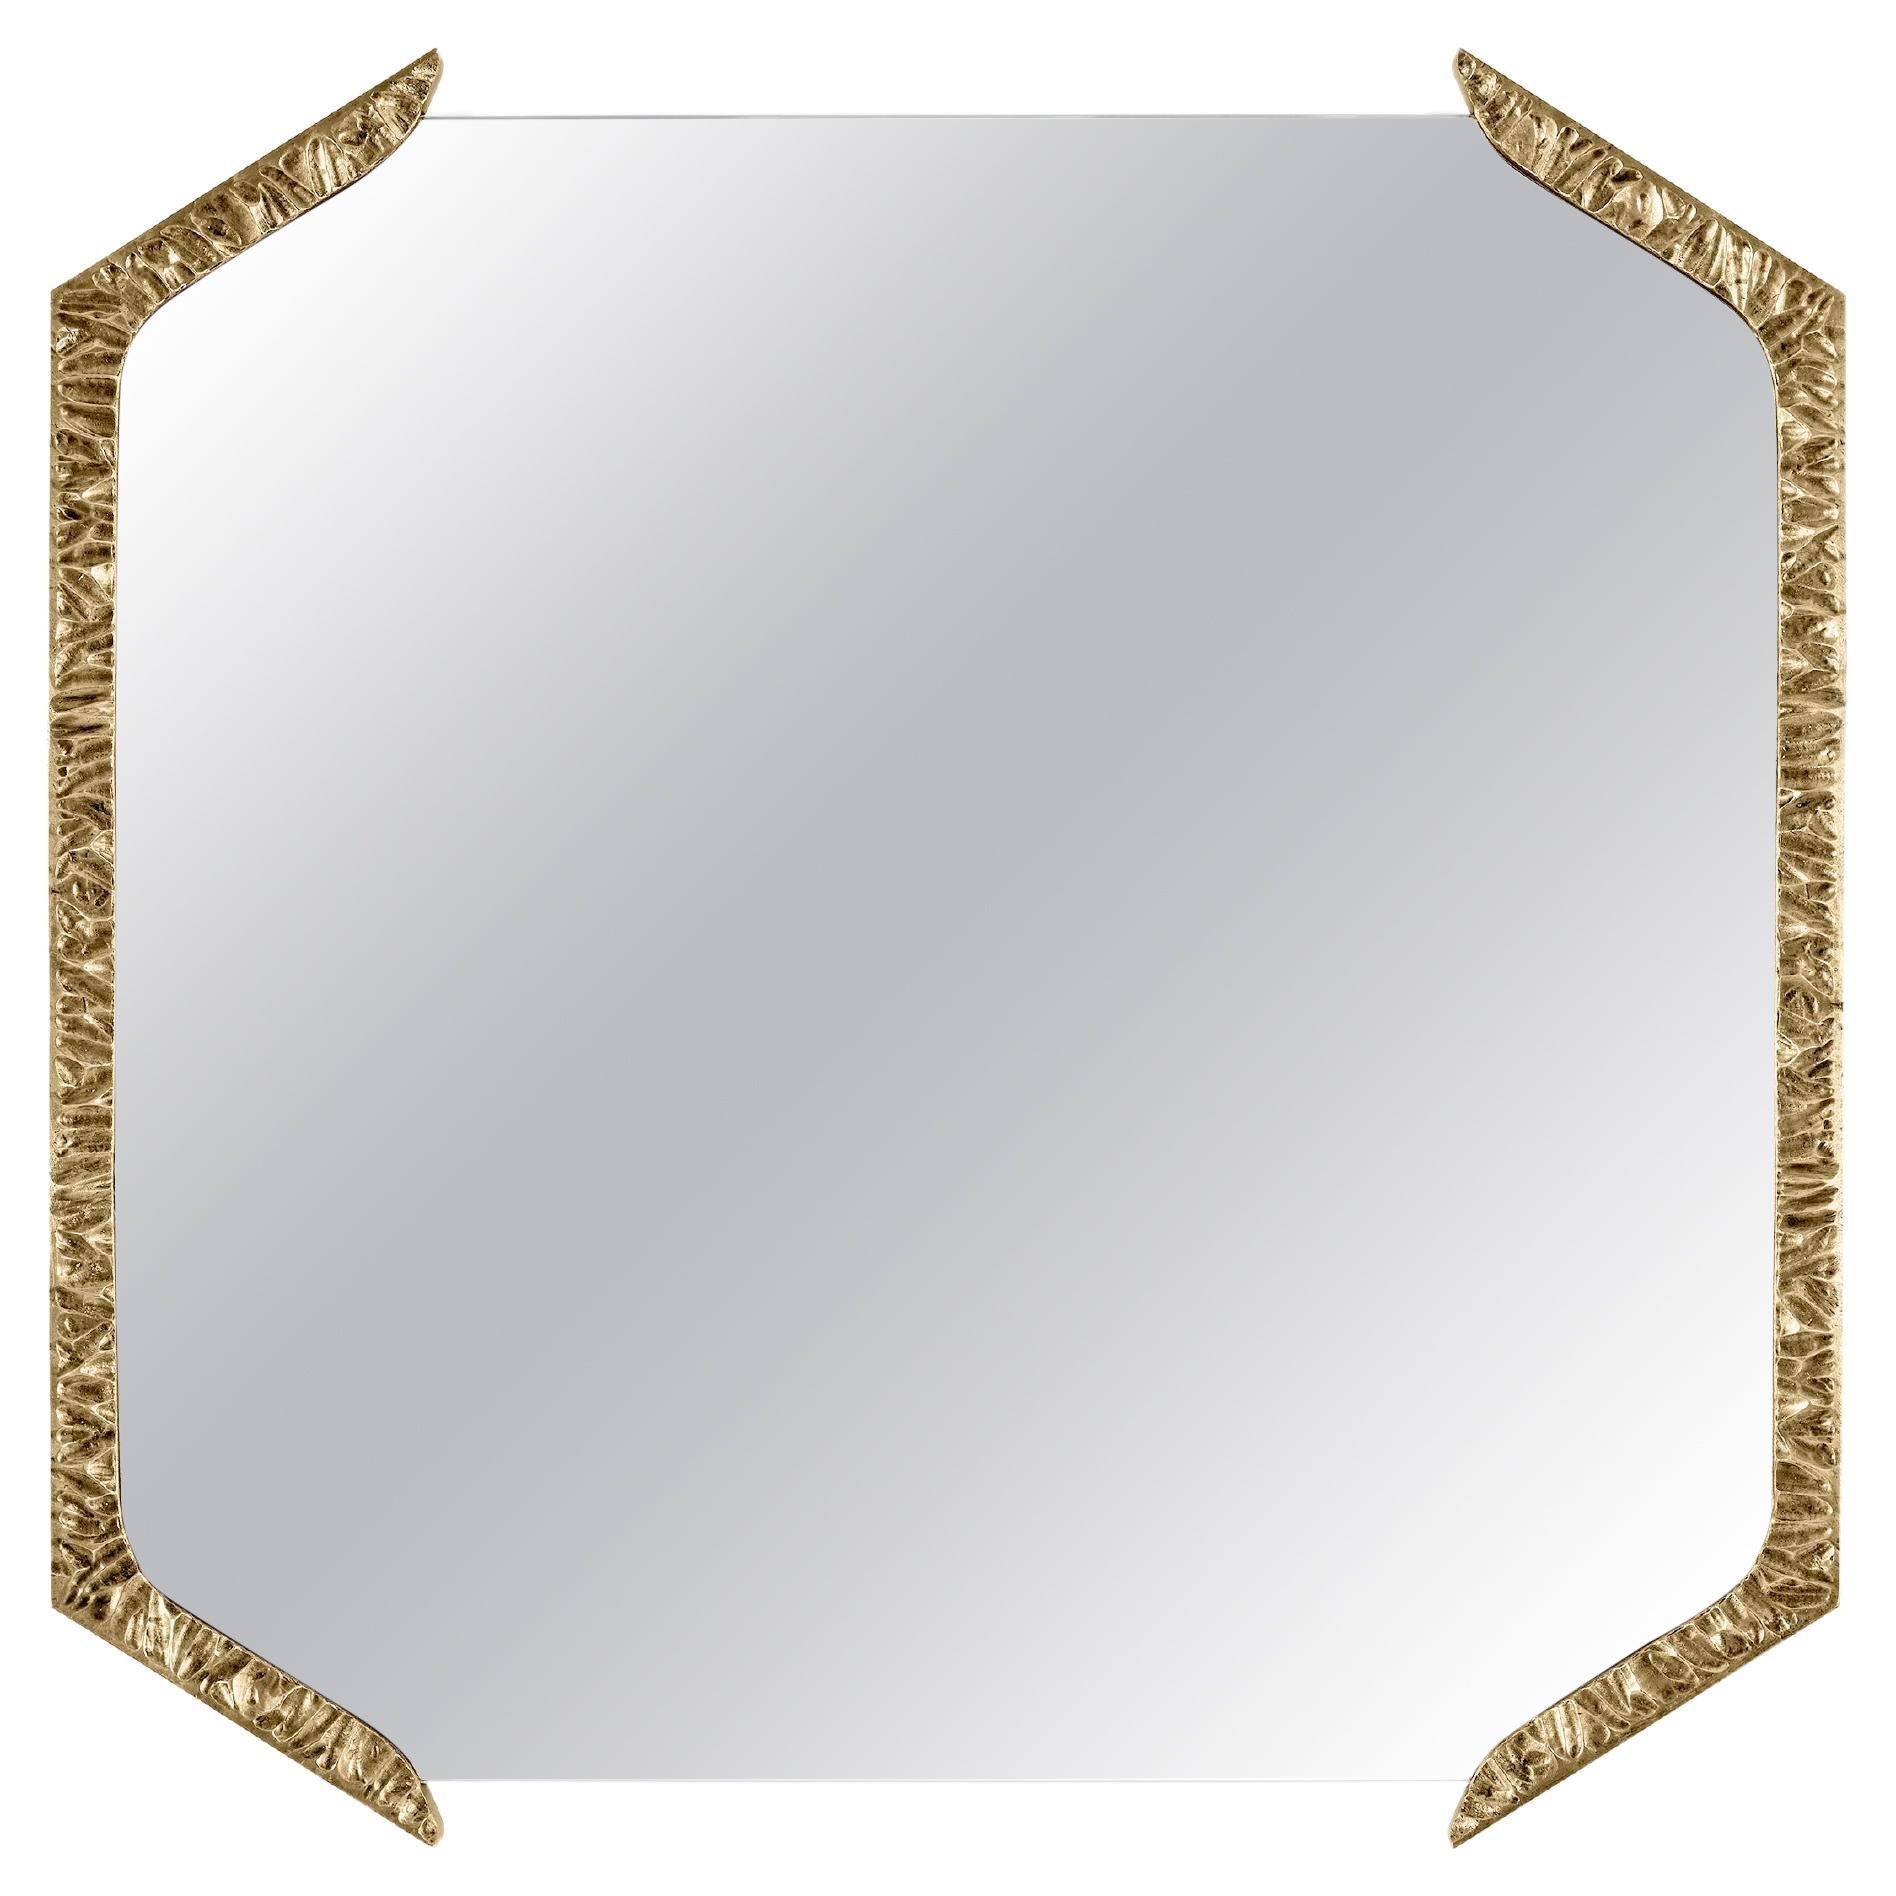 Alentejo Brass Square Mirror by InsidherLand